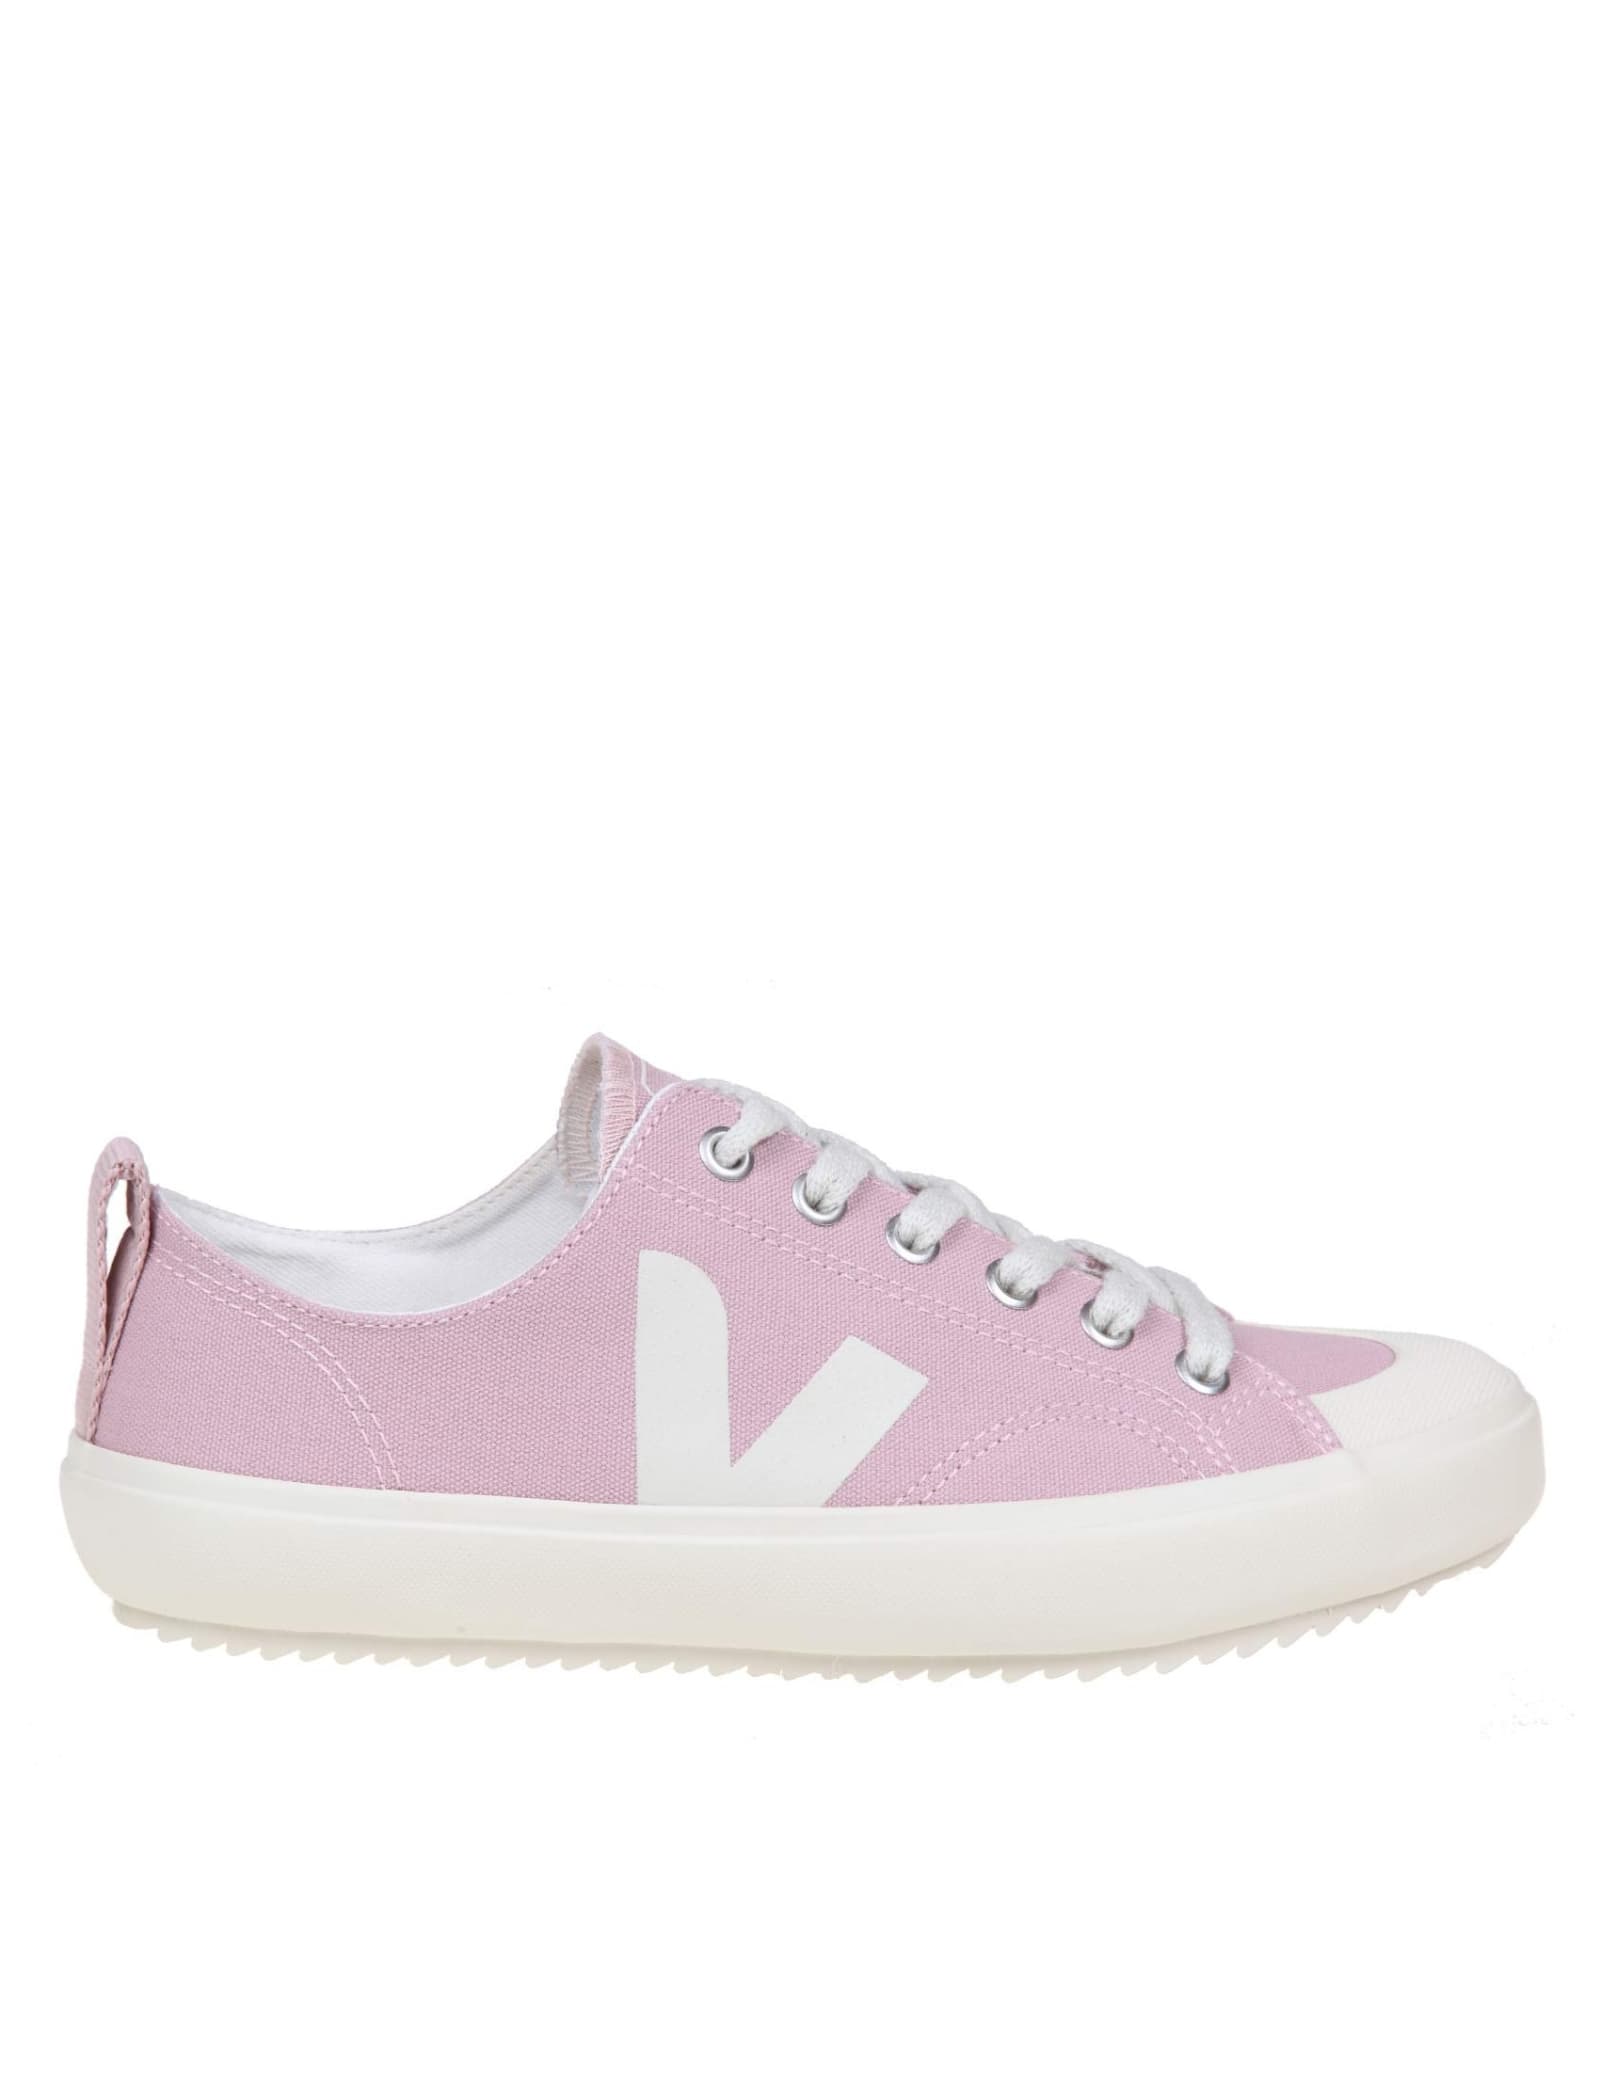 Veja Nova Sneakers In Pink Fabric